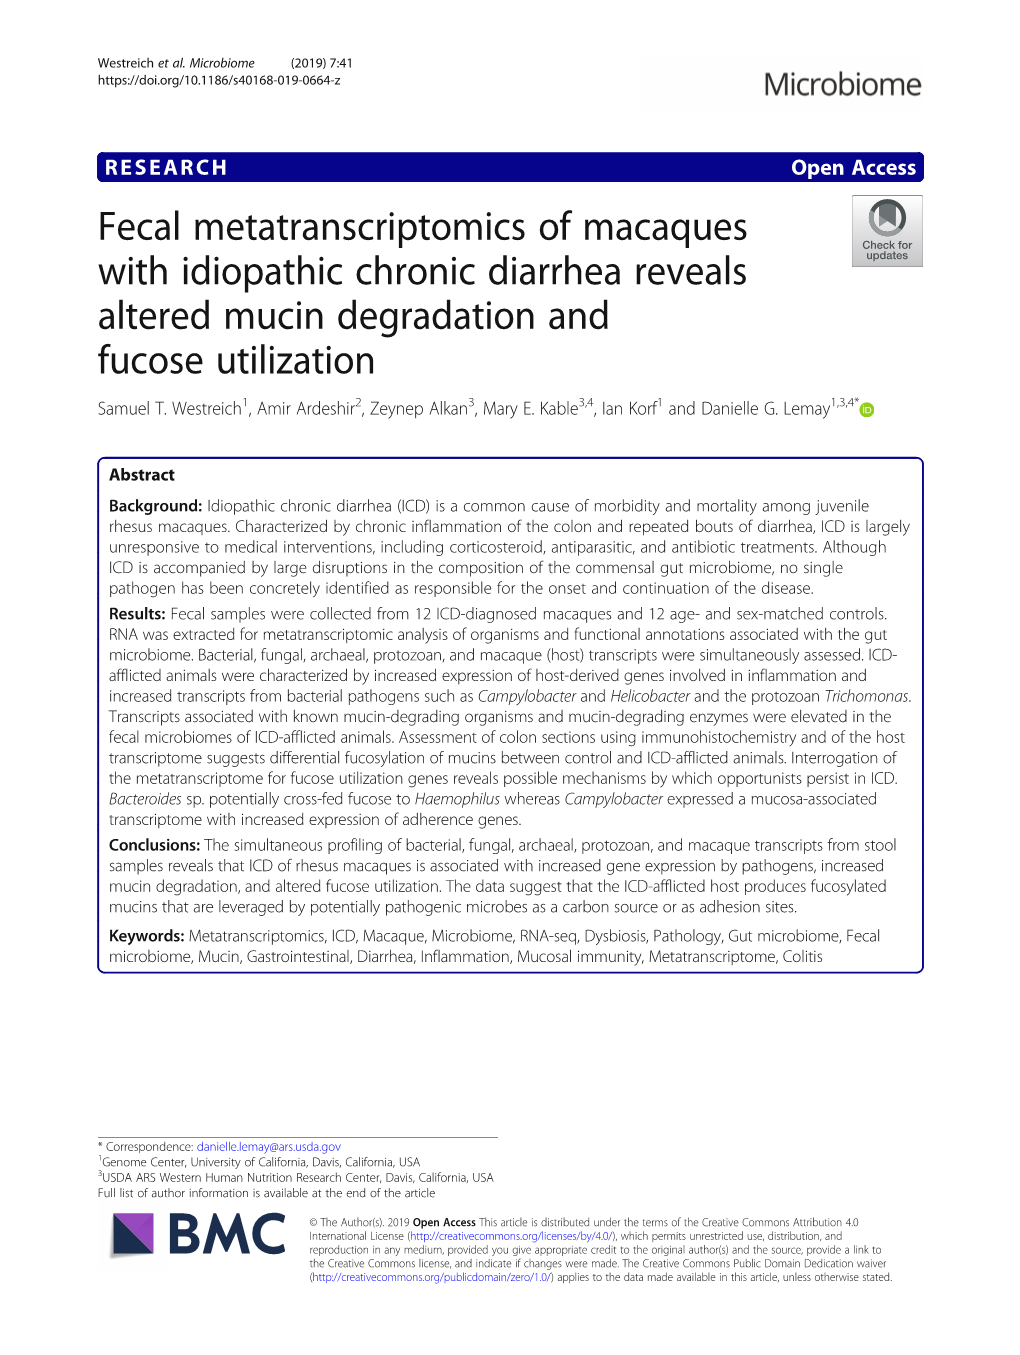 Fecal Metatranscriptomics of Macaques with Idiopathic Chronic Diarrhea Reveals Altered Mucin Degradation and Fucose Utilization Samuel T